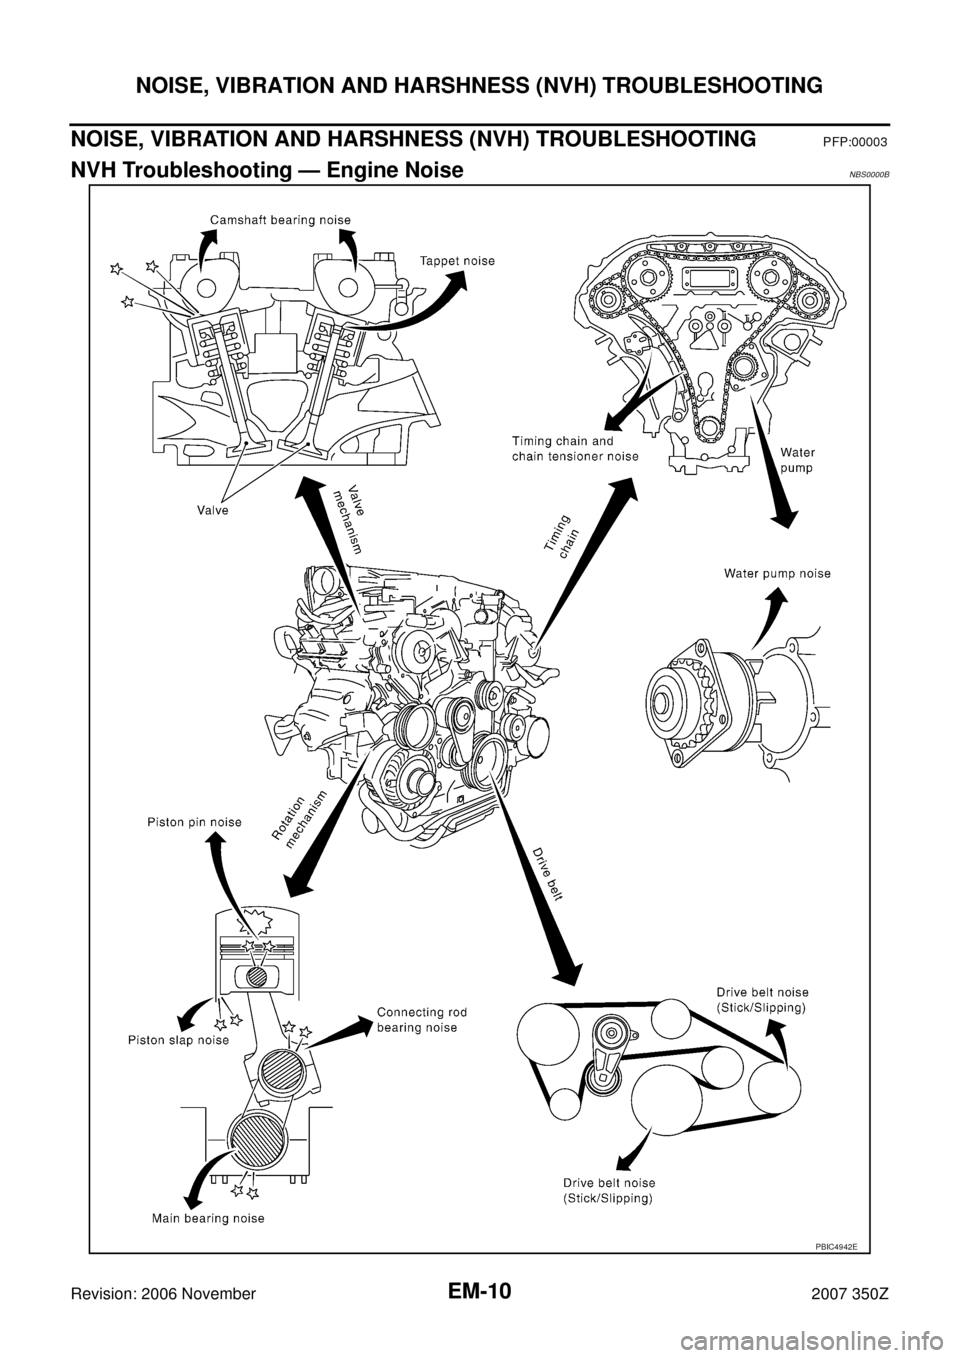 NISSAN 350Z 2007 Z33 Engine Mechanical Workshop Manual EM-10
NOISE, VIBRATION AND HARSHNESS (NVH) TROUBLESHOOTING
Revision: 2006 November2007 350Z
NOISE, VIBRATION AND HARSHNESS (NVH) TROUBLESHOOTINGPFP:00003
NVH Troubleshooting — Engine NoiseNBS0000B
P